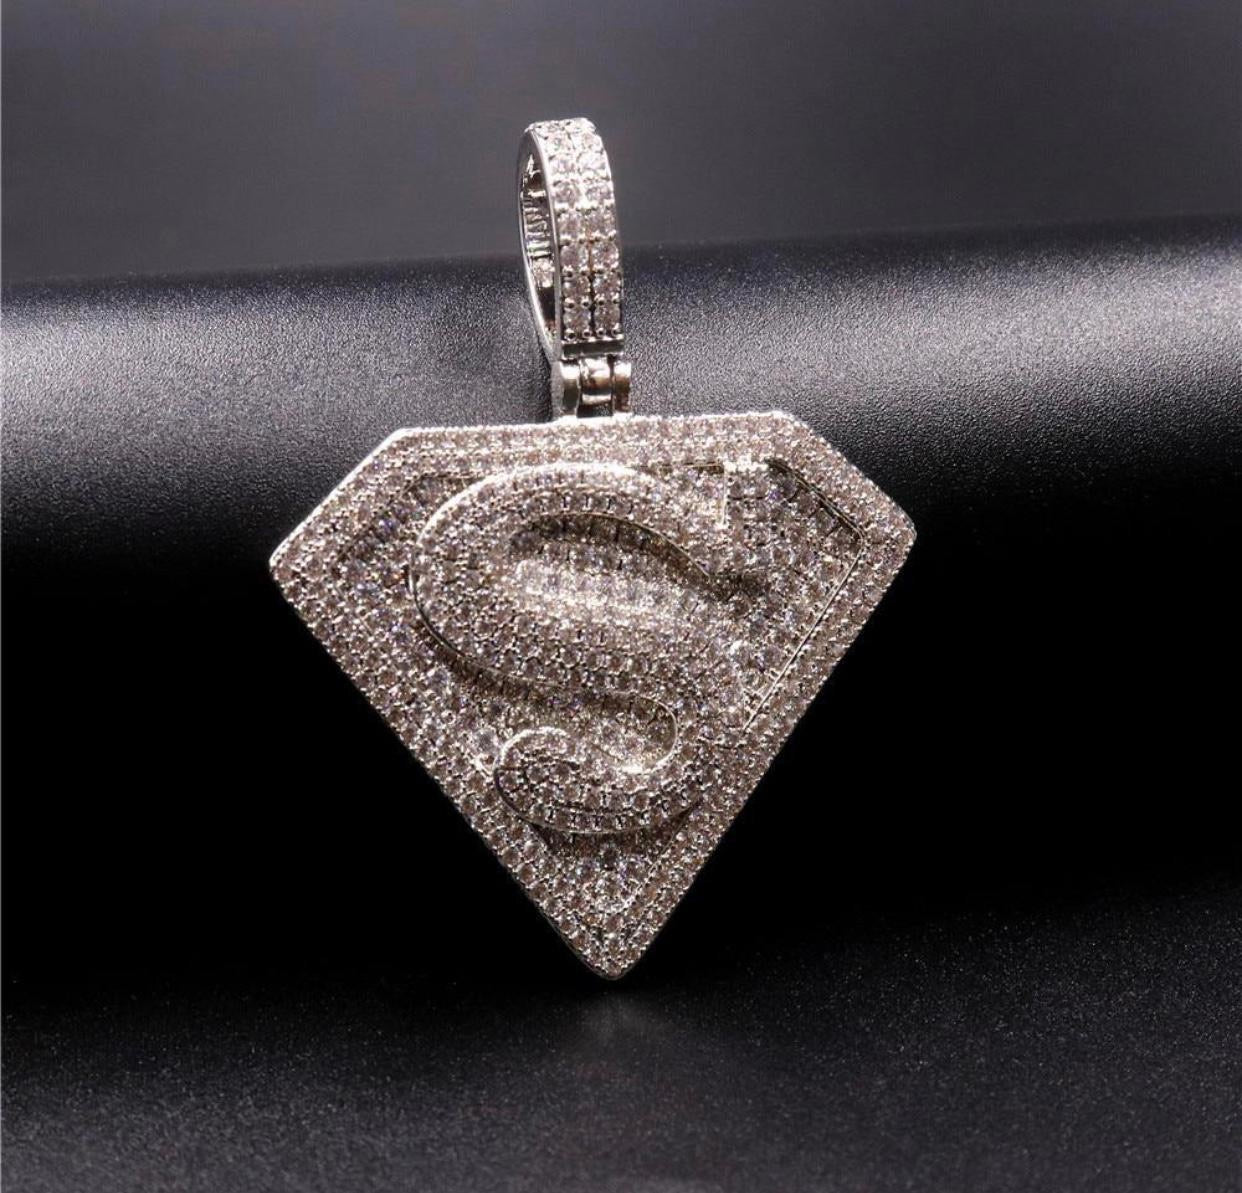 Superman pendants with chain combo set